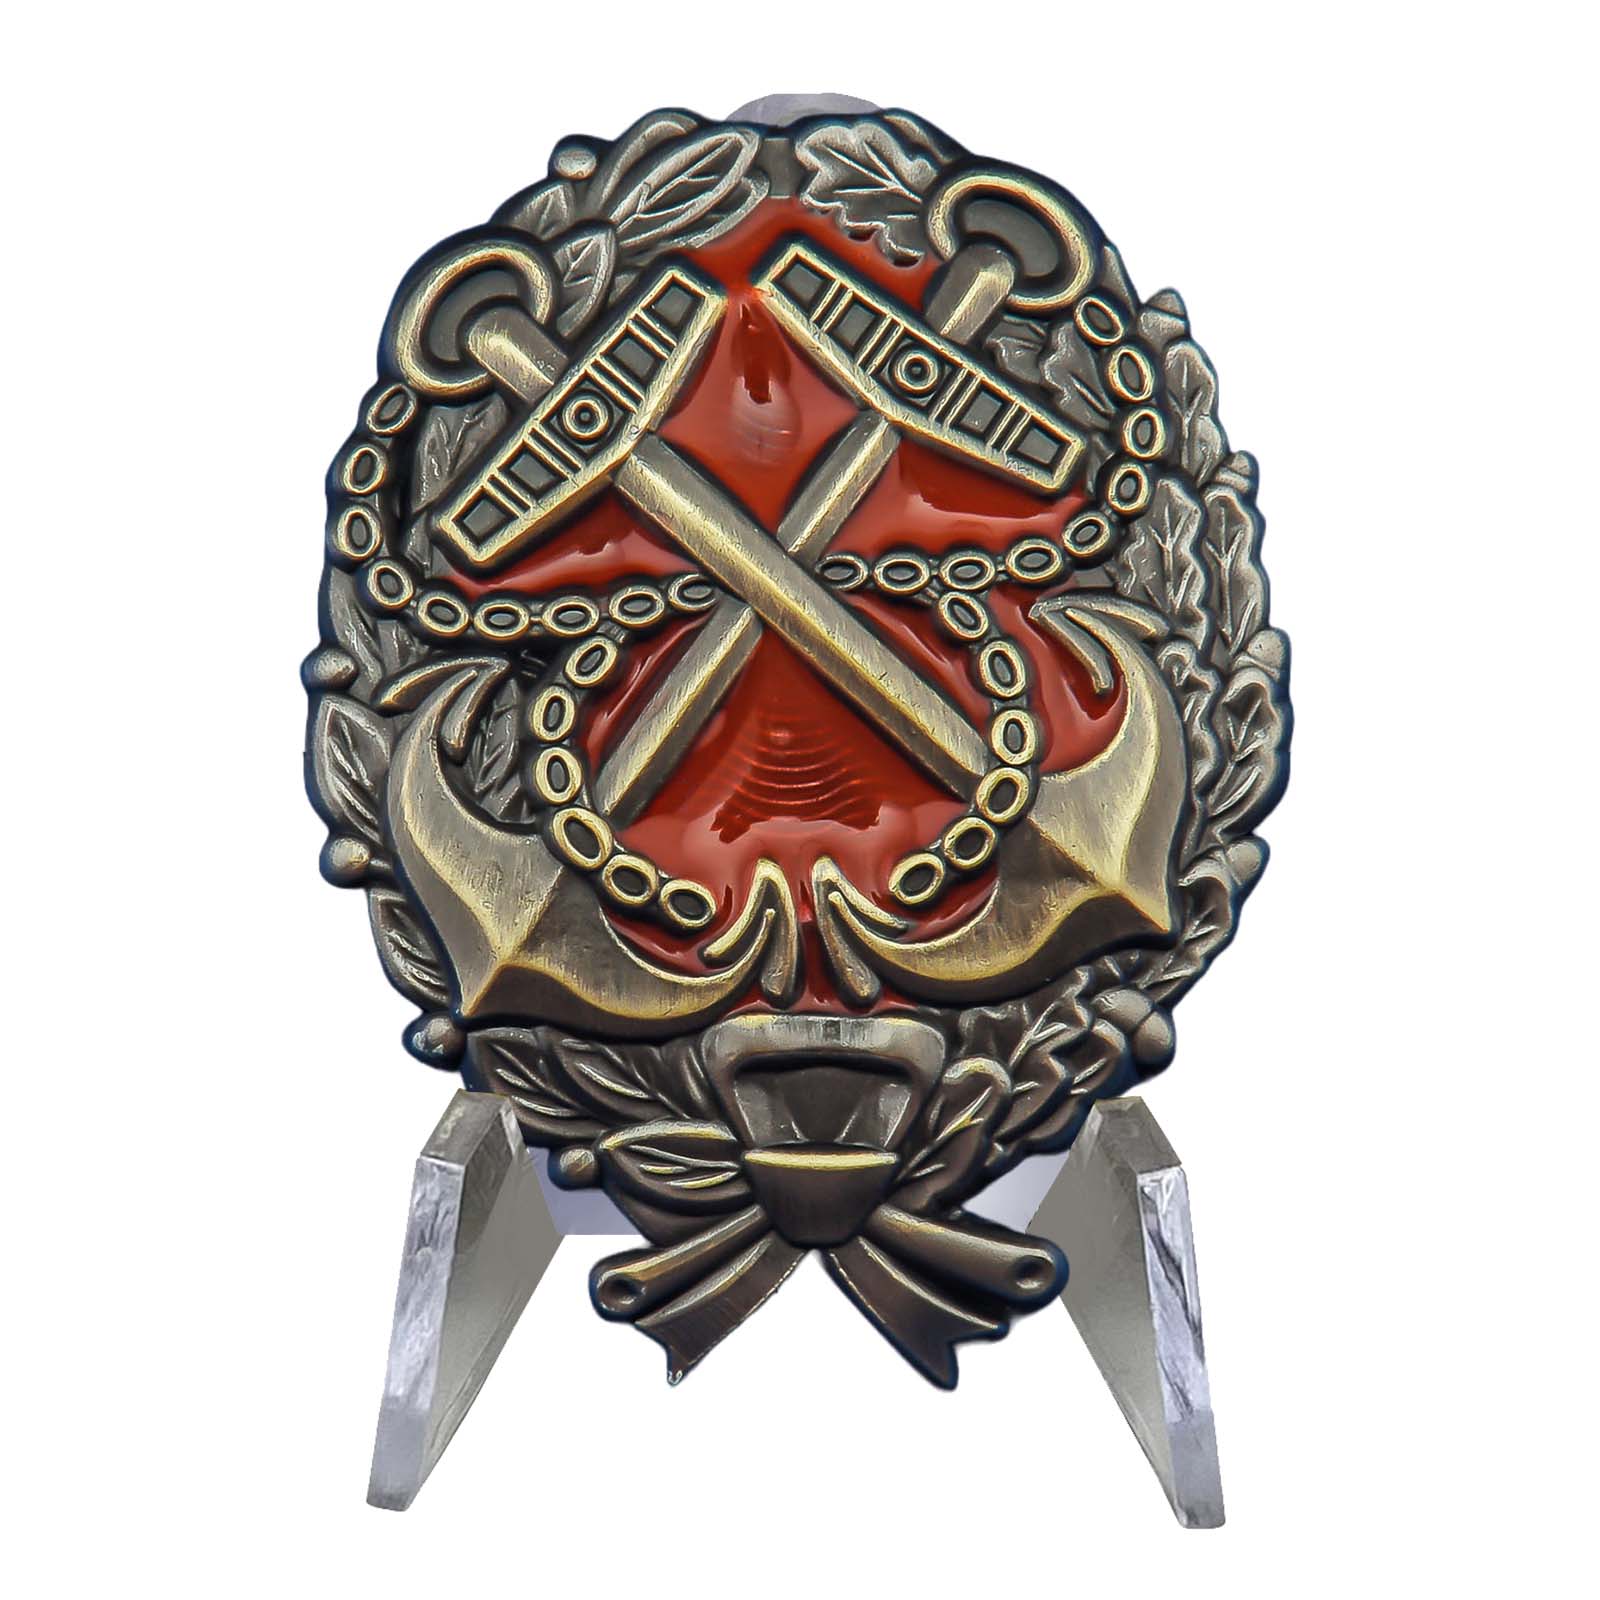 Знак Красного командира РККФ (1917-1918) на подставке